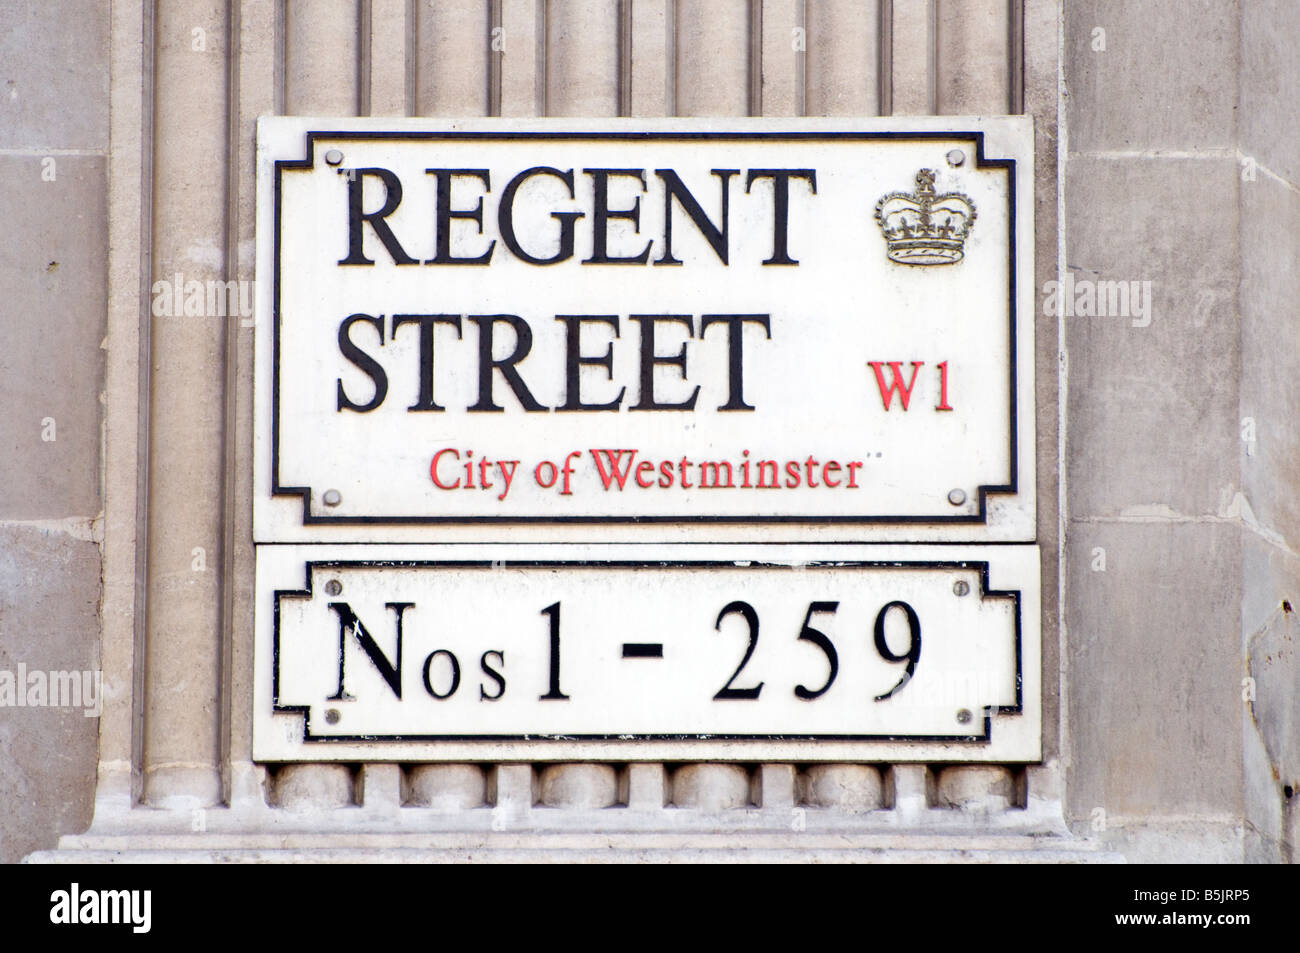 Regent Street sign Londres Angleterre Royaume-uni Banque D'Images